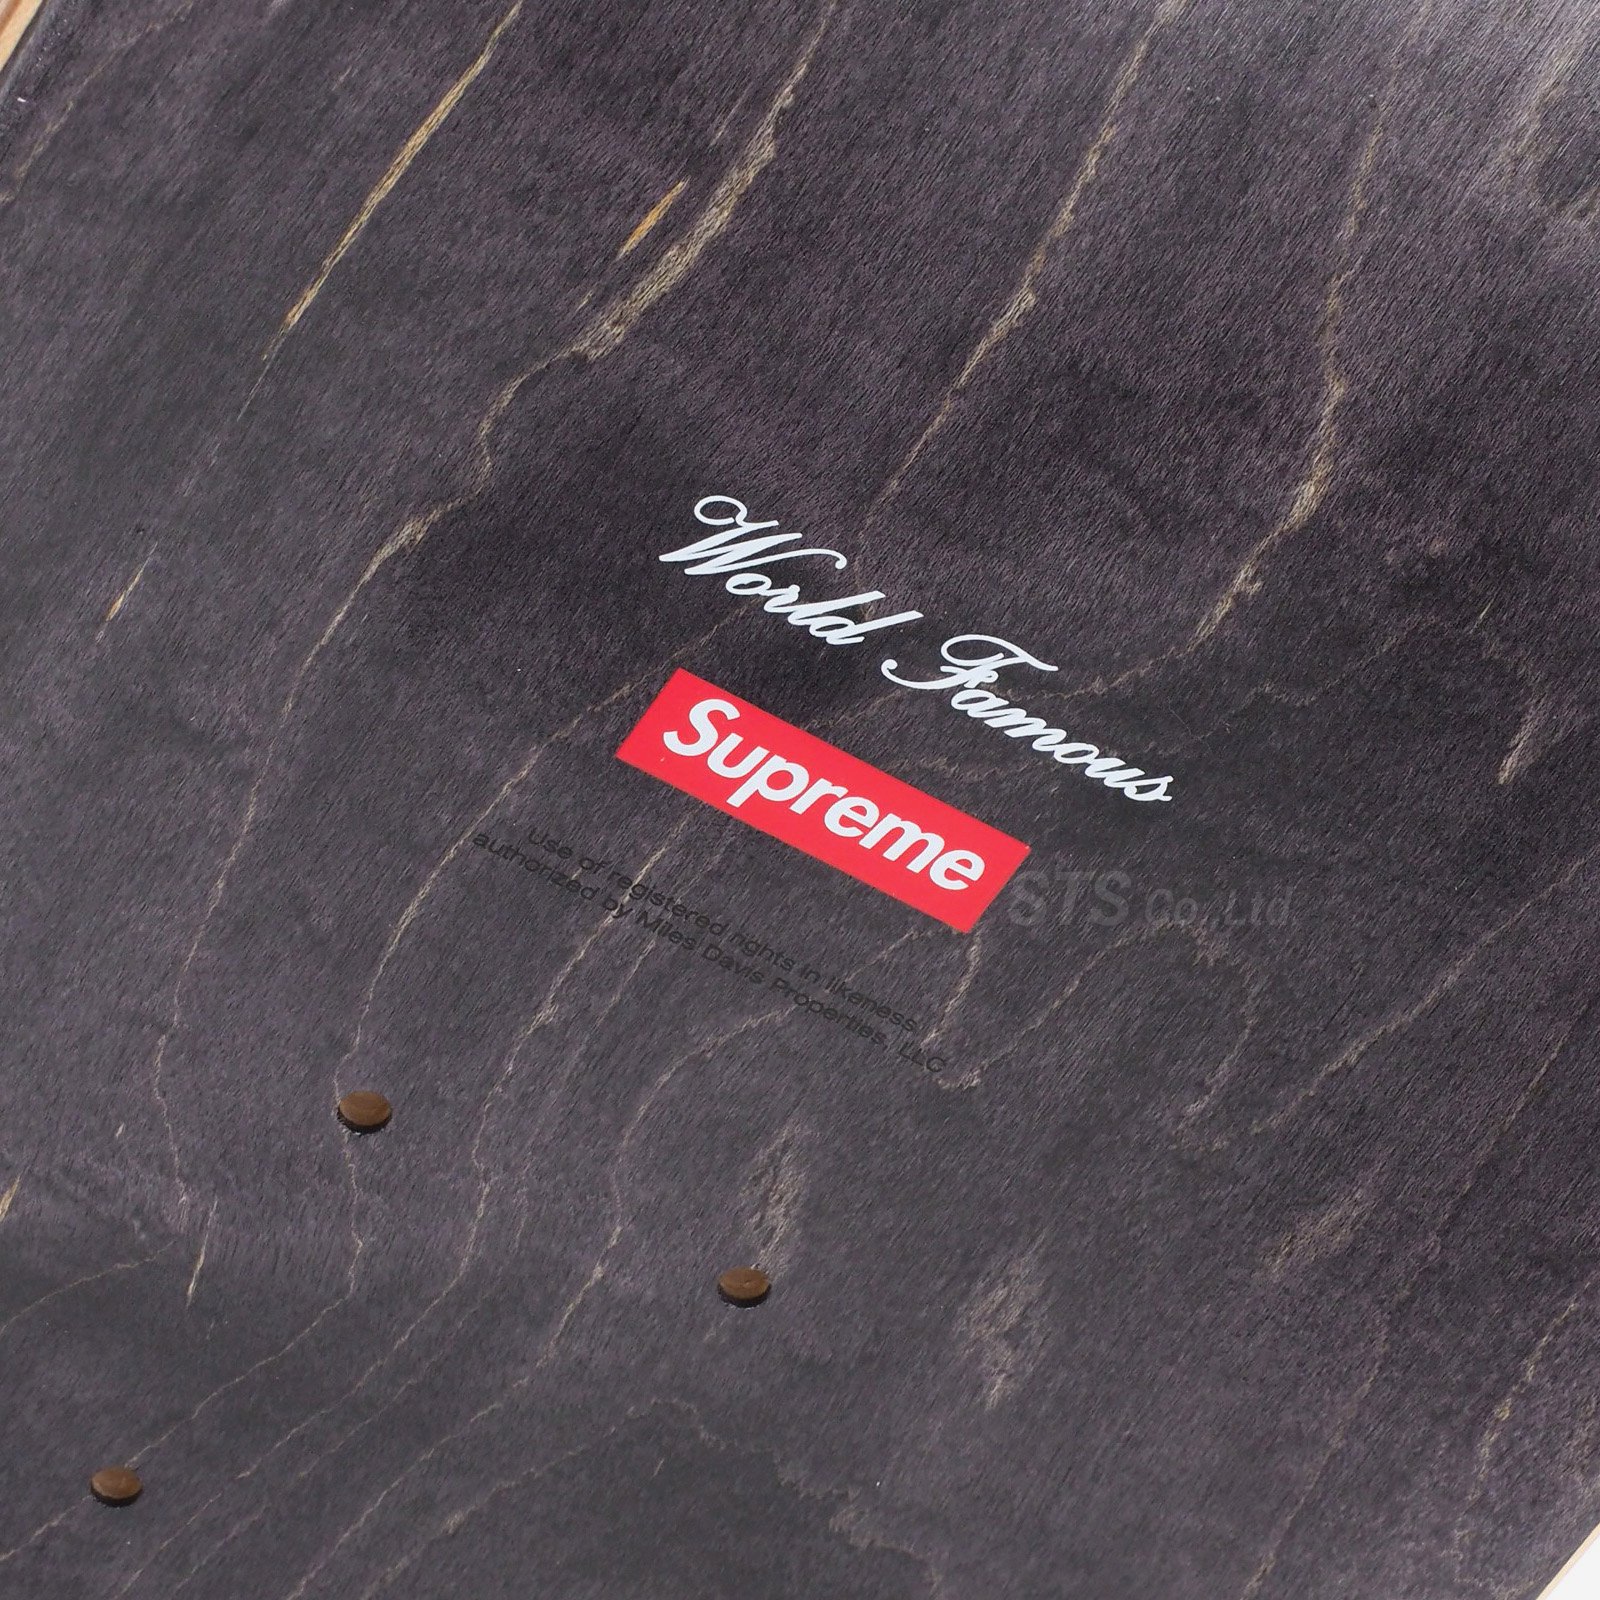 Supreme - Miles Davis Skateboard - UG.SHAFT